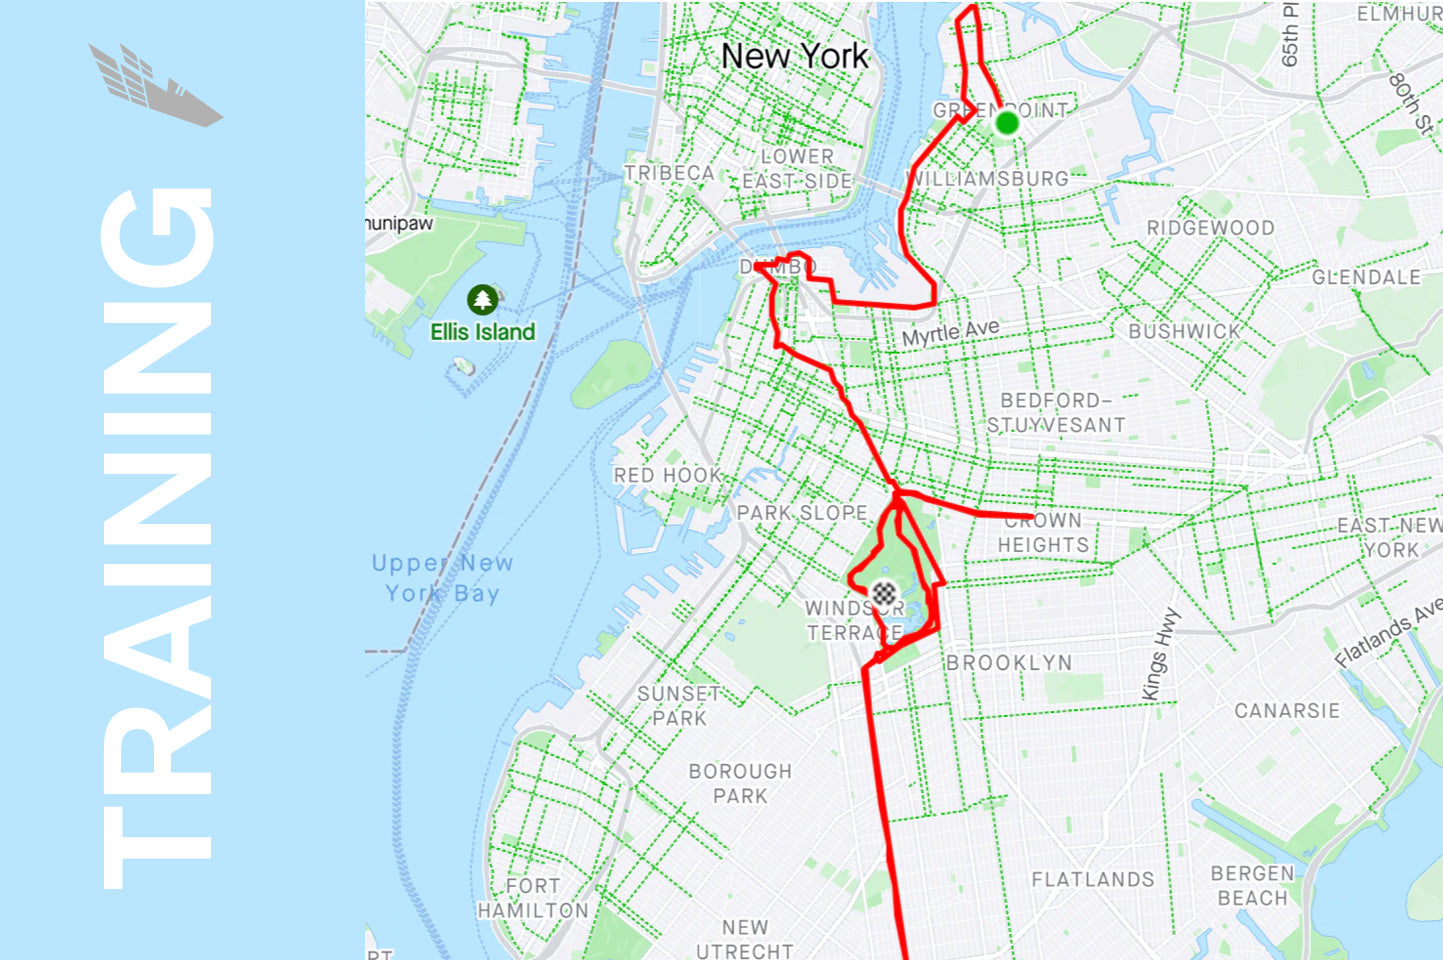 Brooklyn Marathon (and Half Marathon) Course Overview and Strategy Bakline